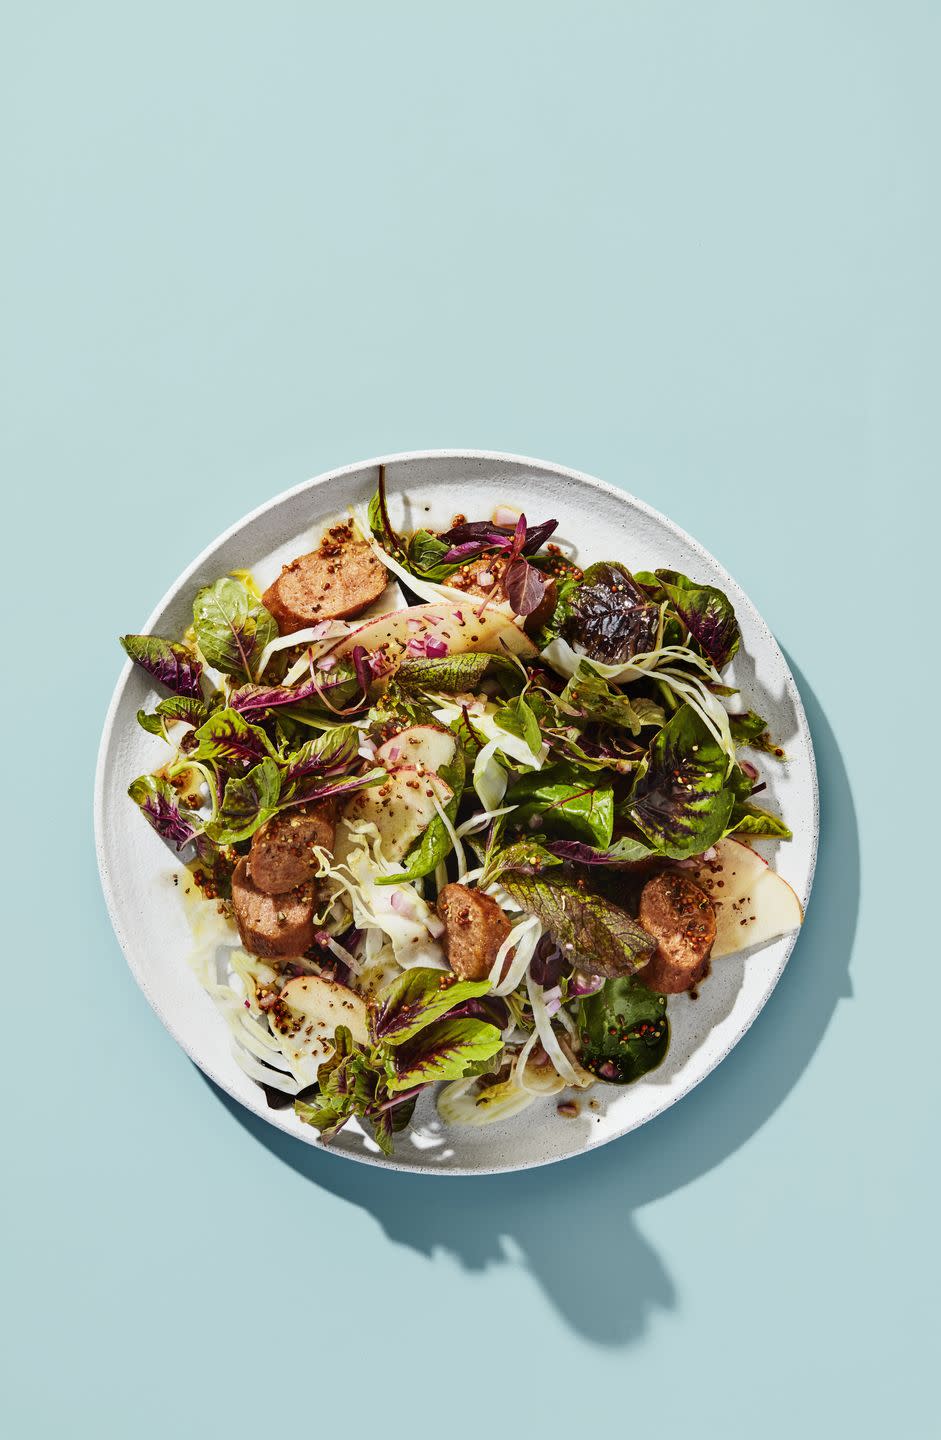 Vegan Bratwurst-Apple Salad With Caraway Vinaigrette